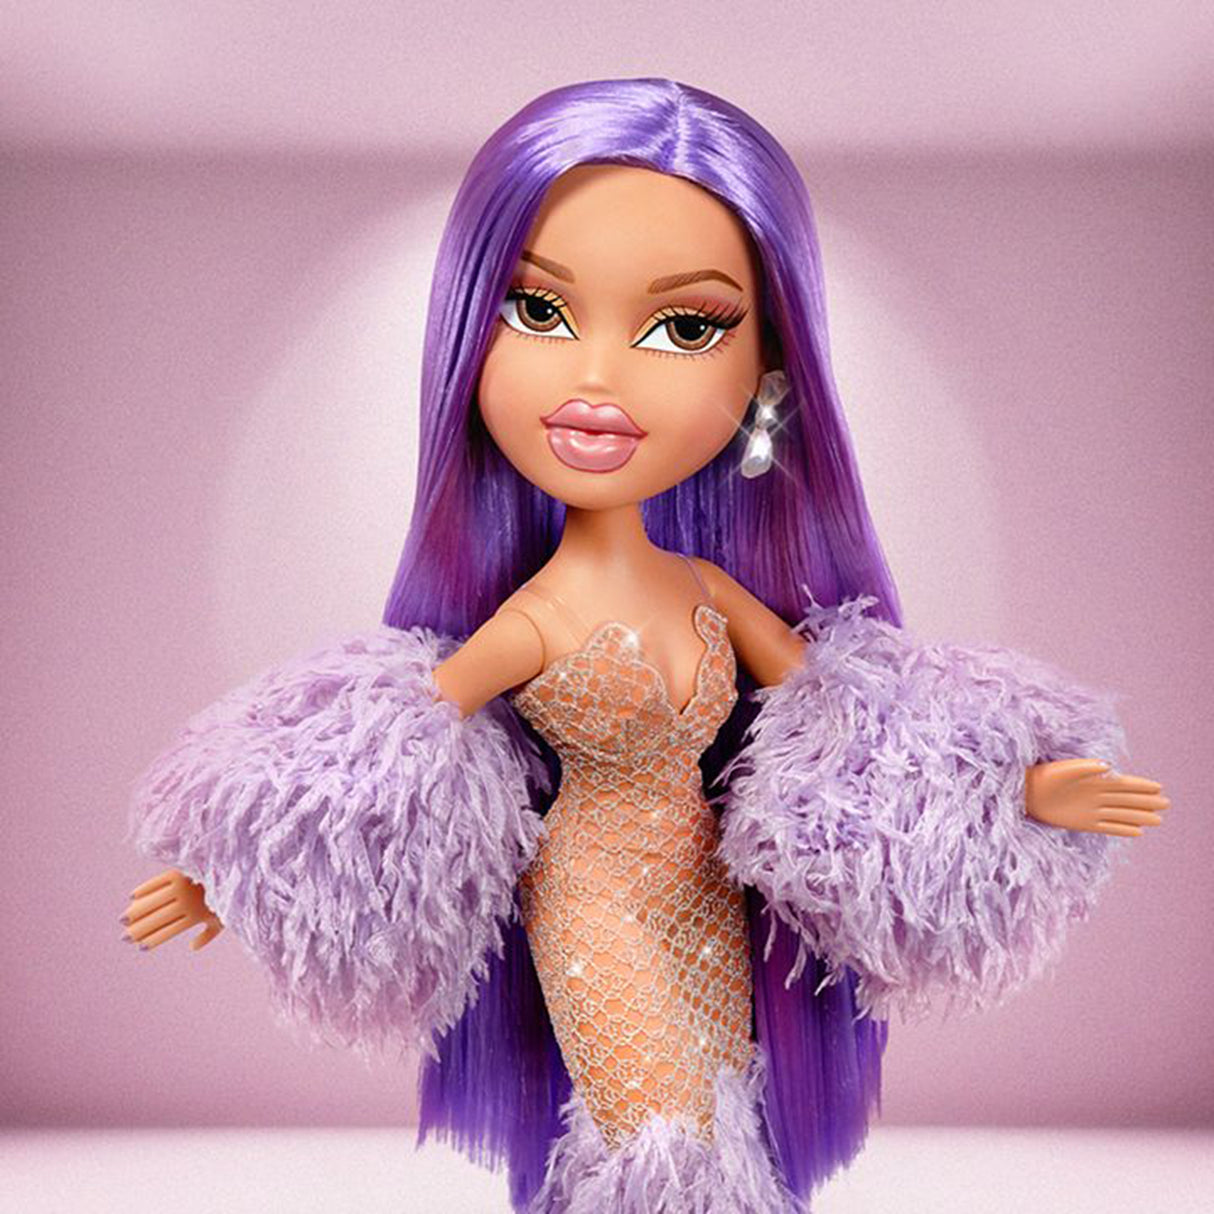 Bratz Celebrity Doll Kylie Jenner Limited Edition (24 inch tall)